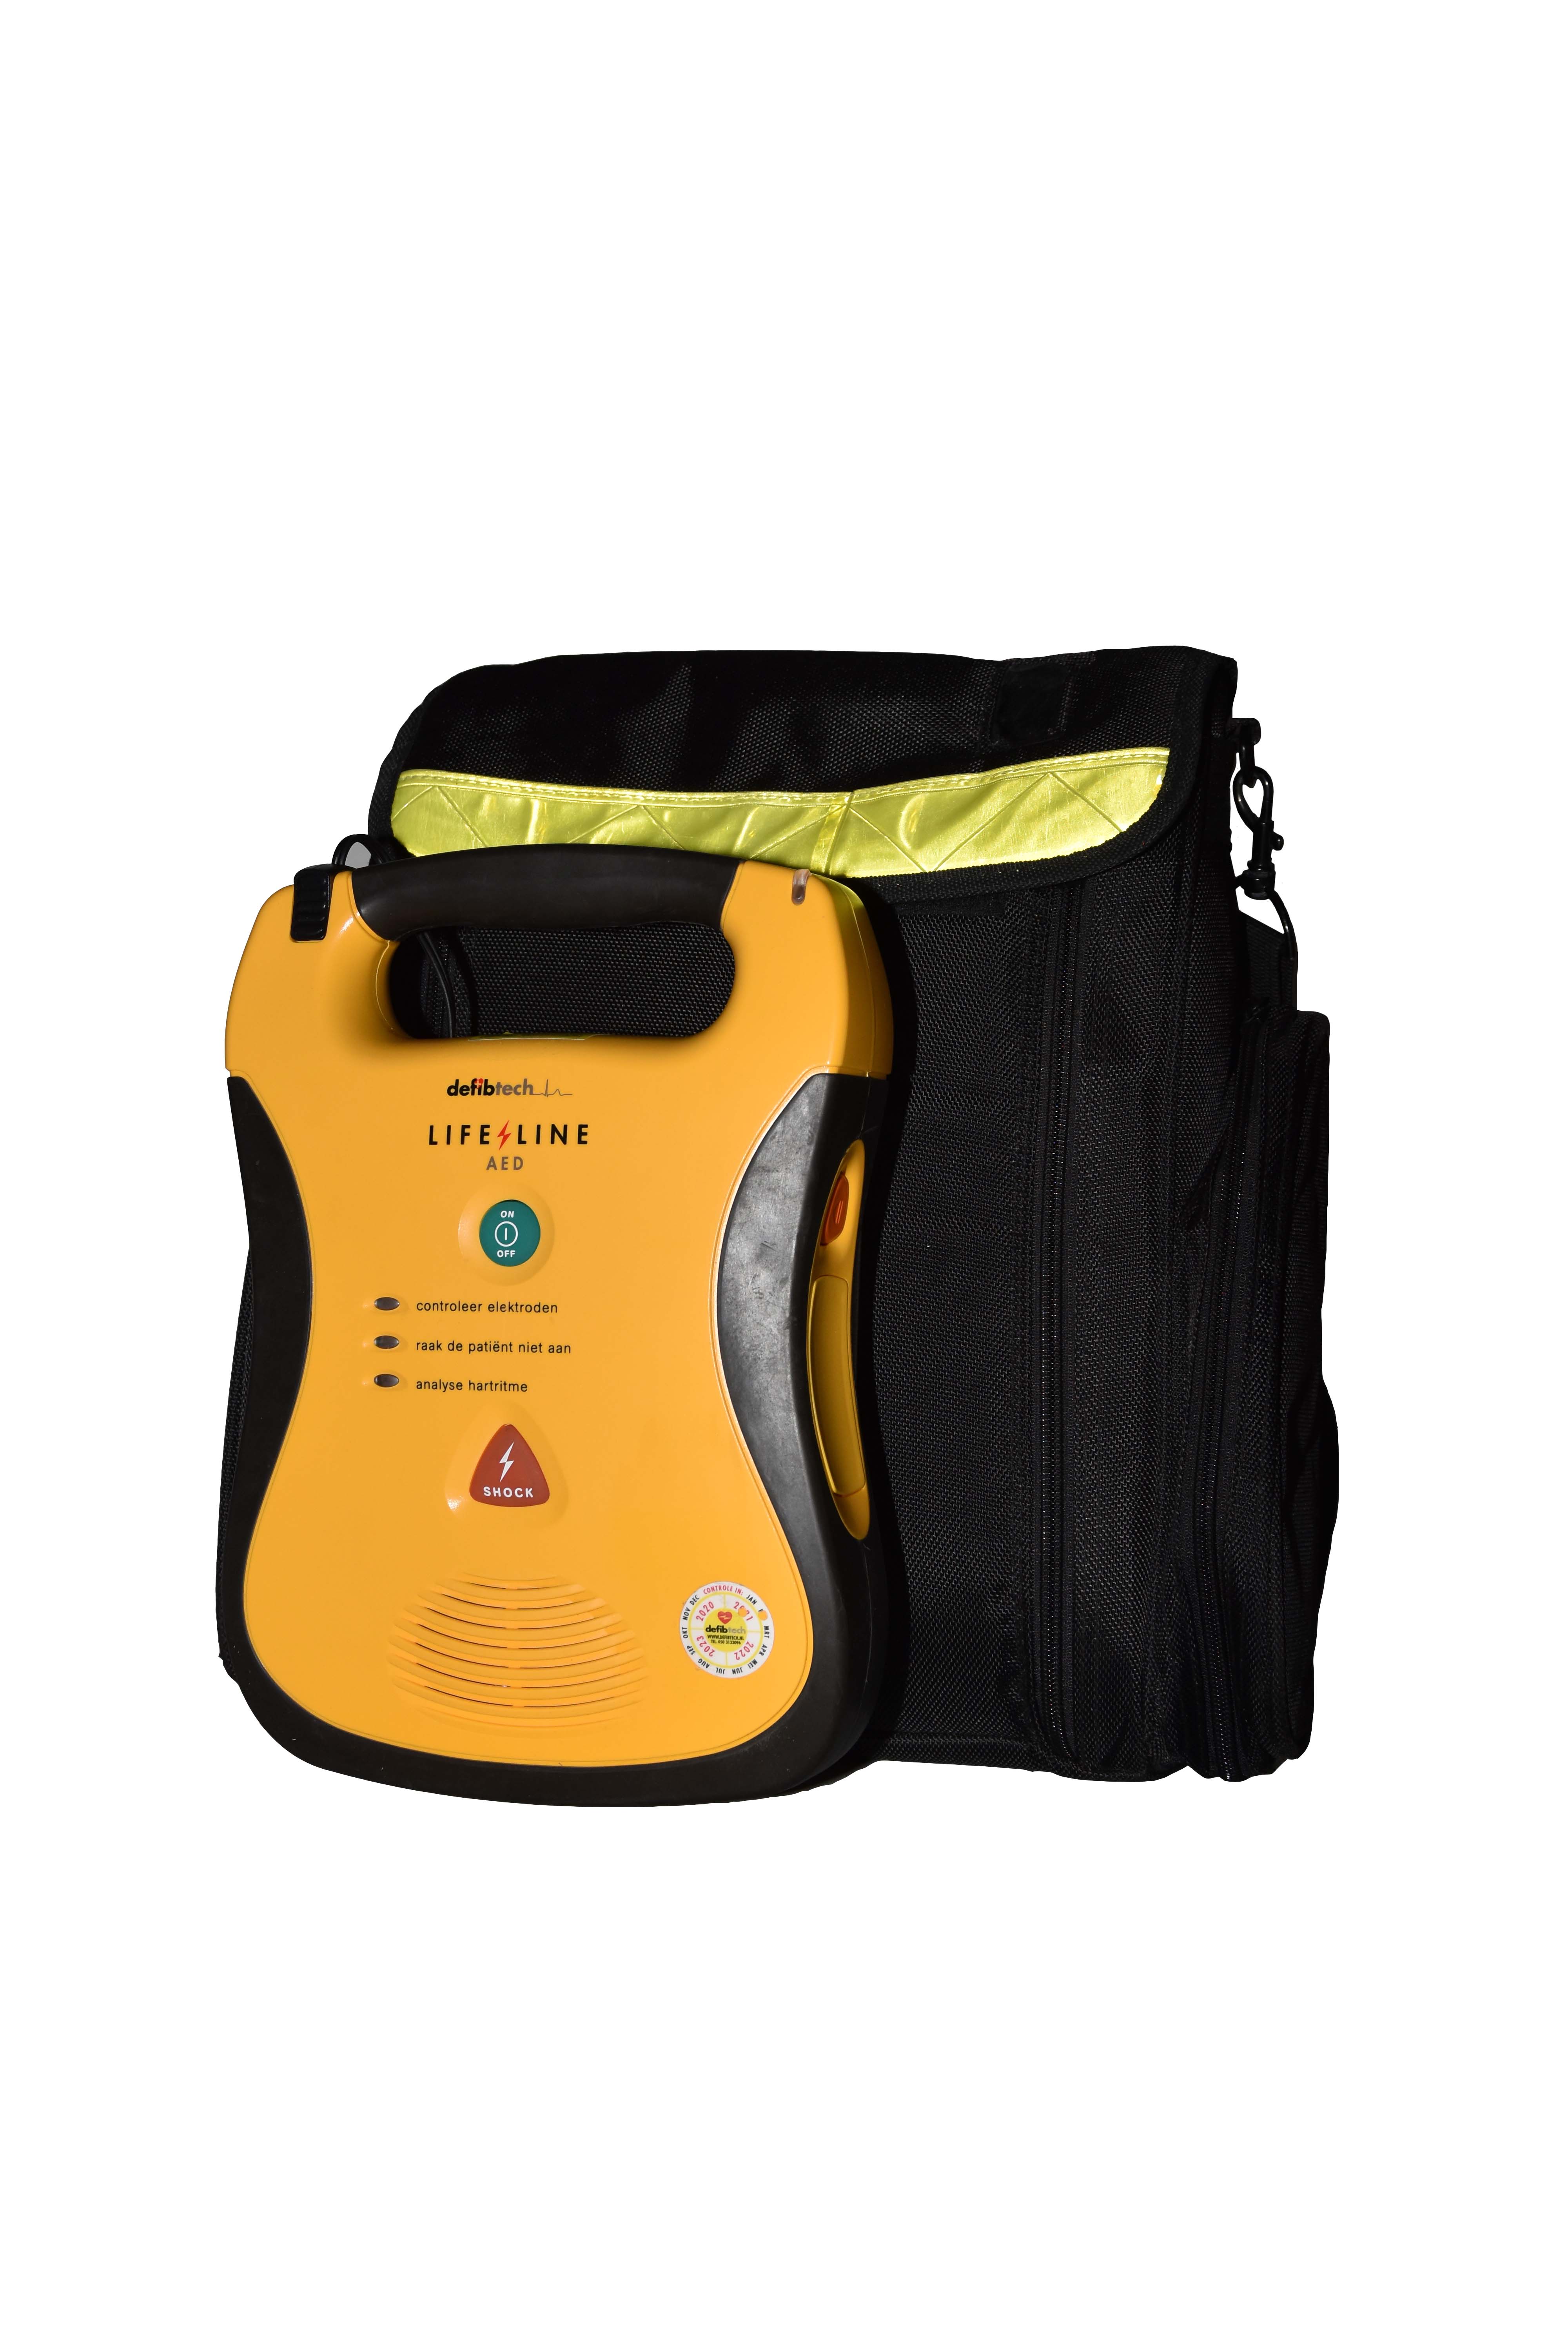 Defibrillator Lifeline View Pakket